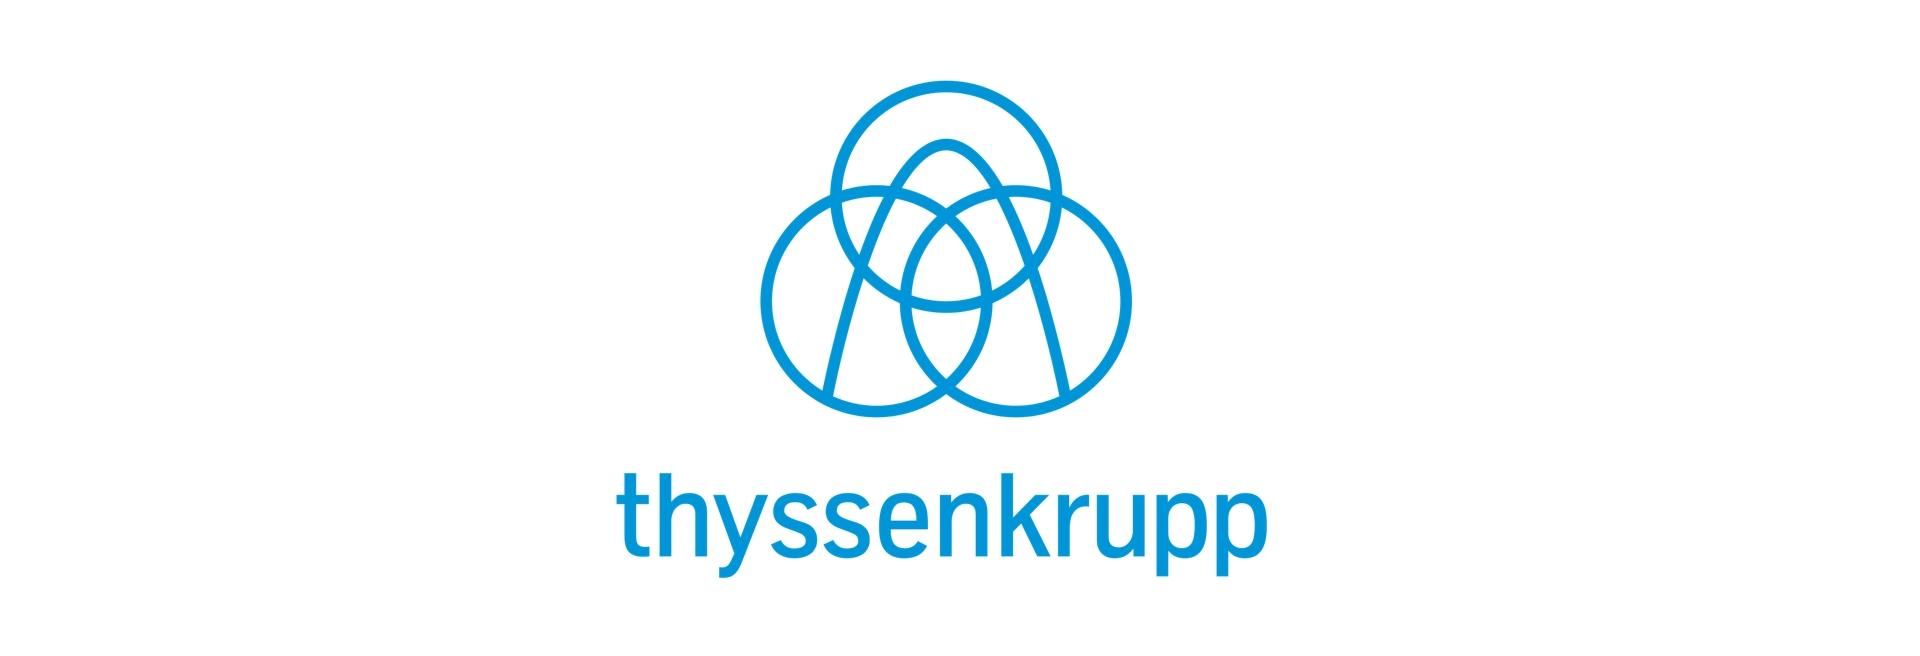 Thyssenkrupp is Building an Engineering Service Centre in Veszprém